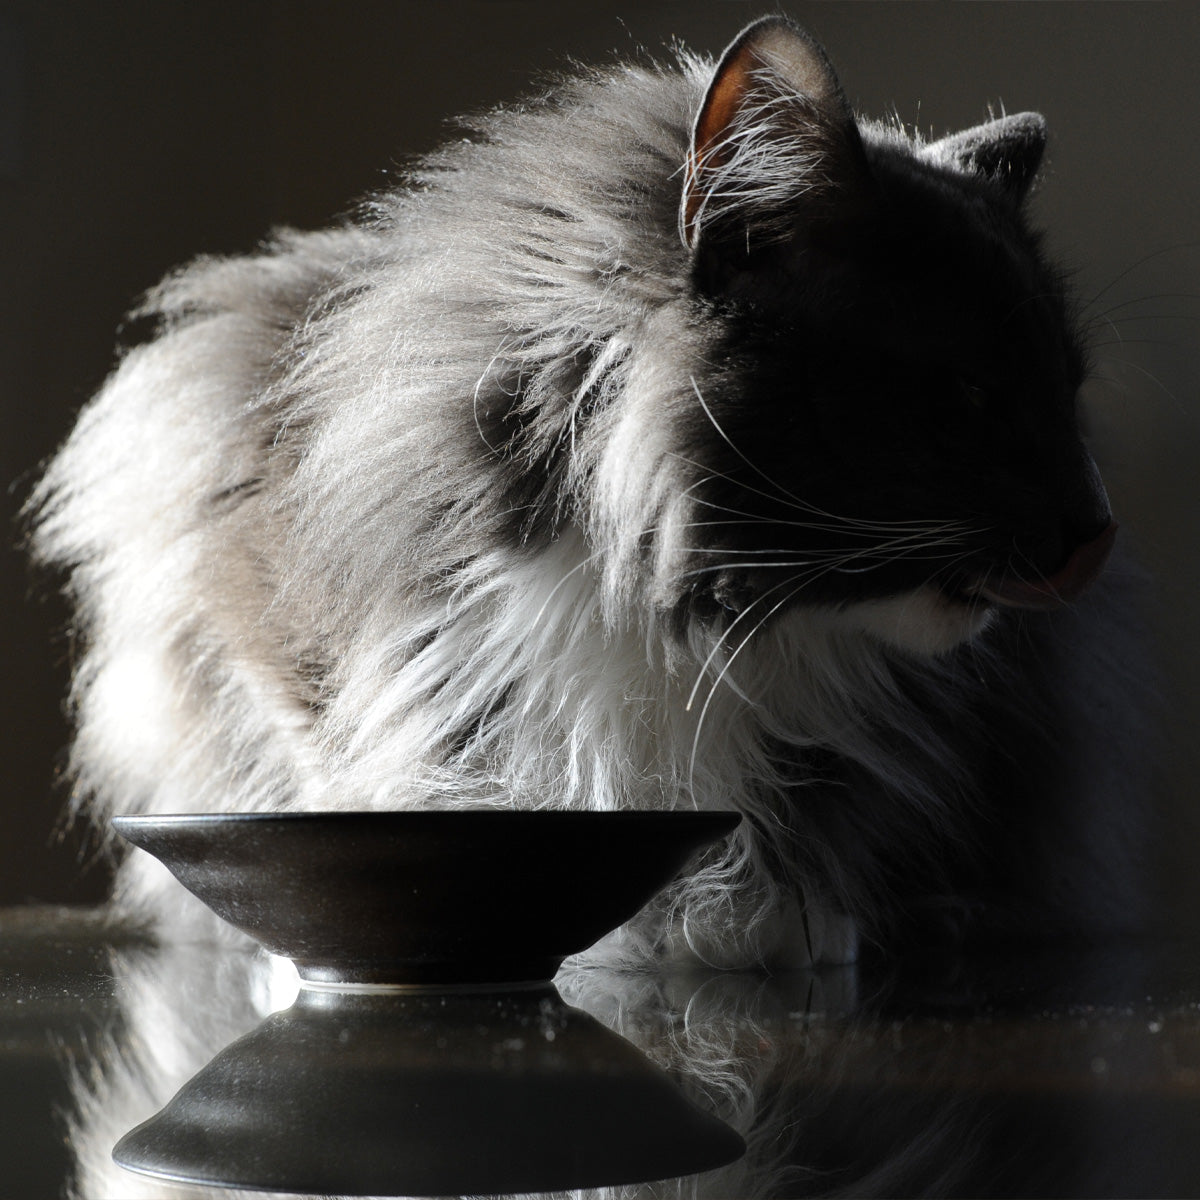 Kuriēto Round Rippuru Ceramic Cat Bowl, Handmade In Japan | at Made Moggie